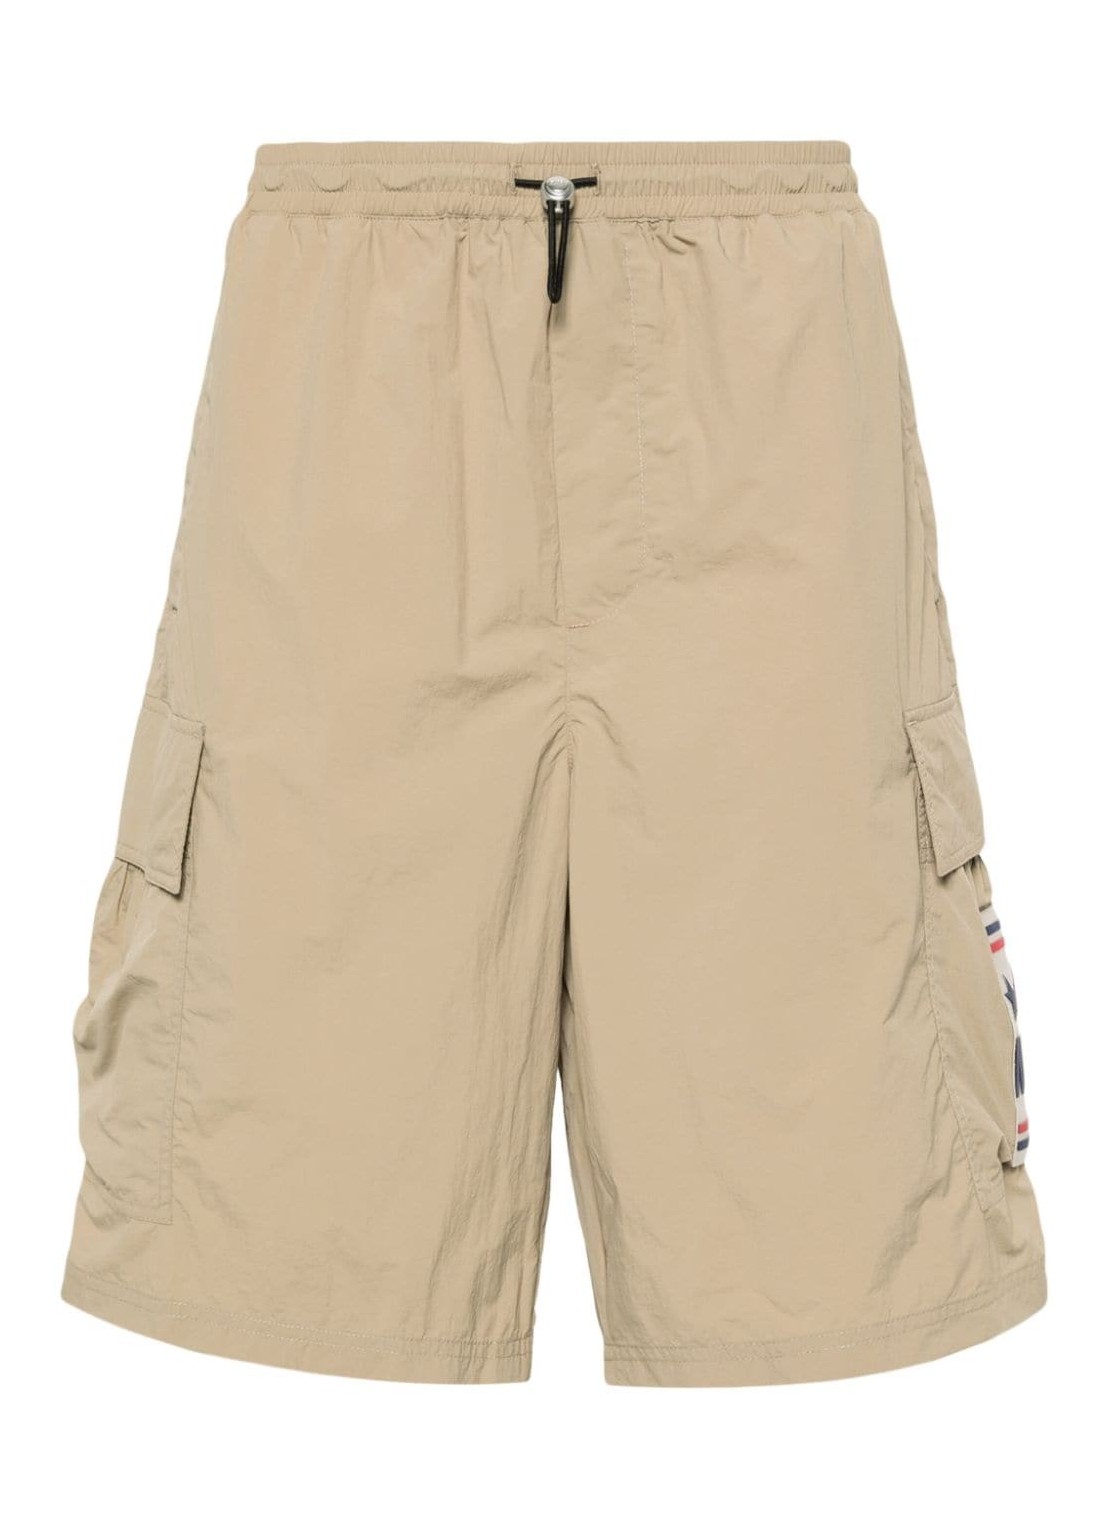 Pantalon corto autry short pant man shorts main man shpm552c 552c talla verde
 